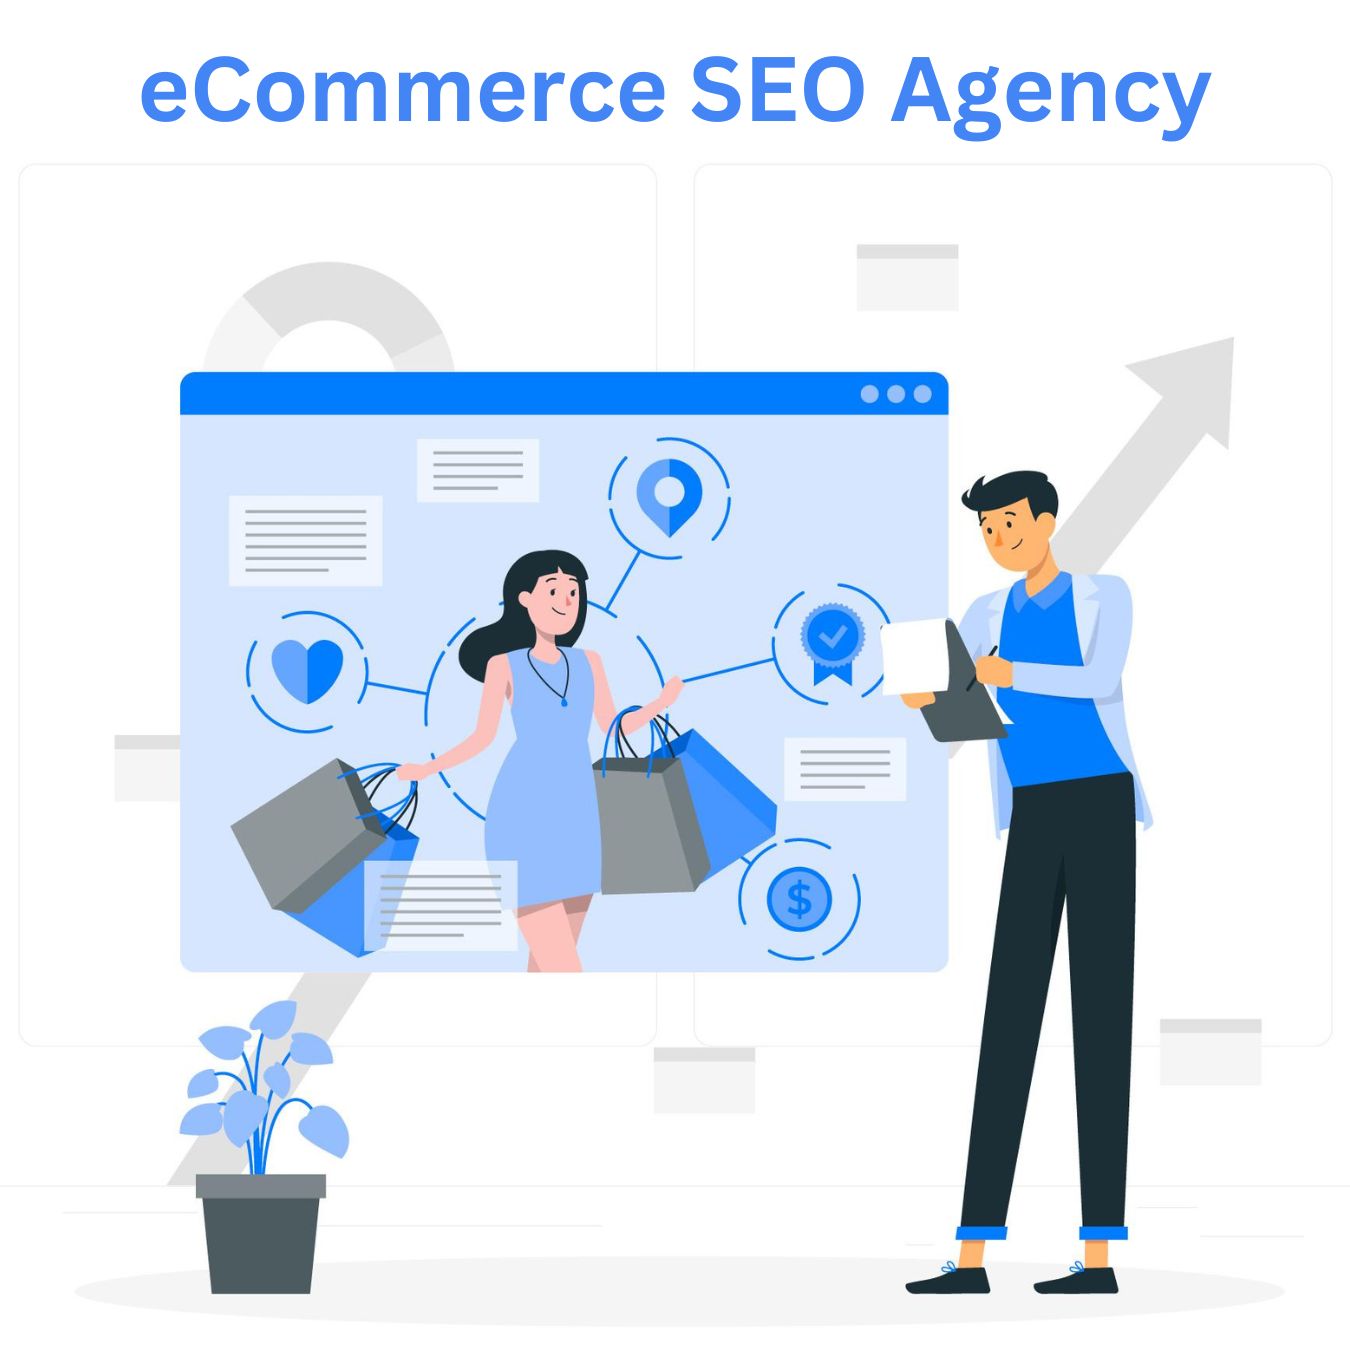 eCommerce SEO Agency